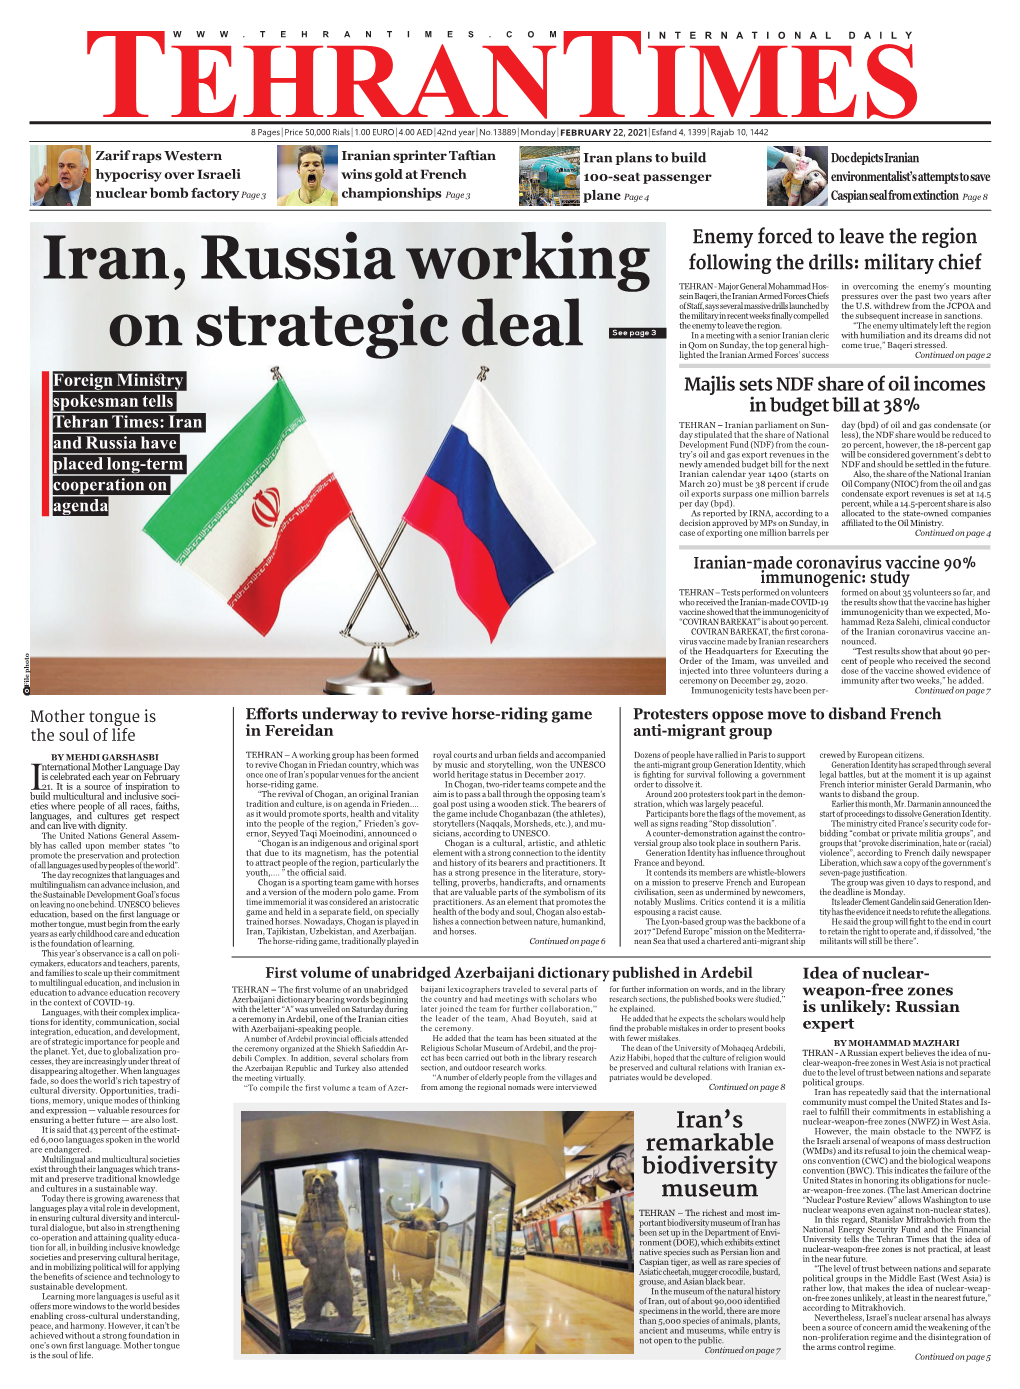 Iran, Russia Working on Strategic Deal